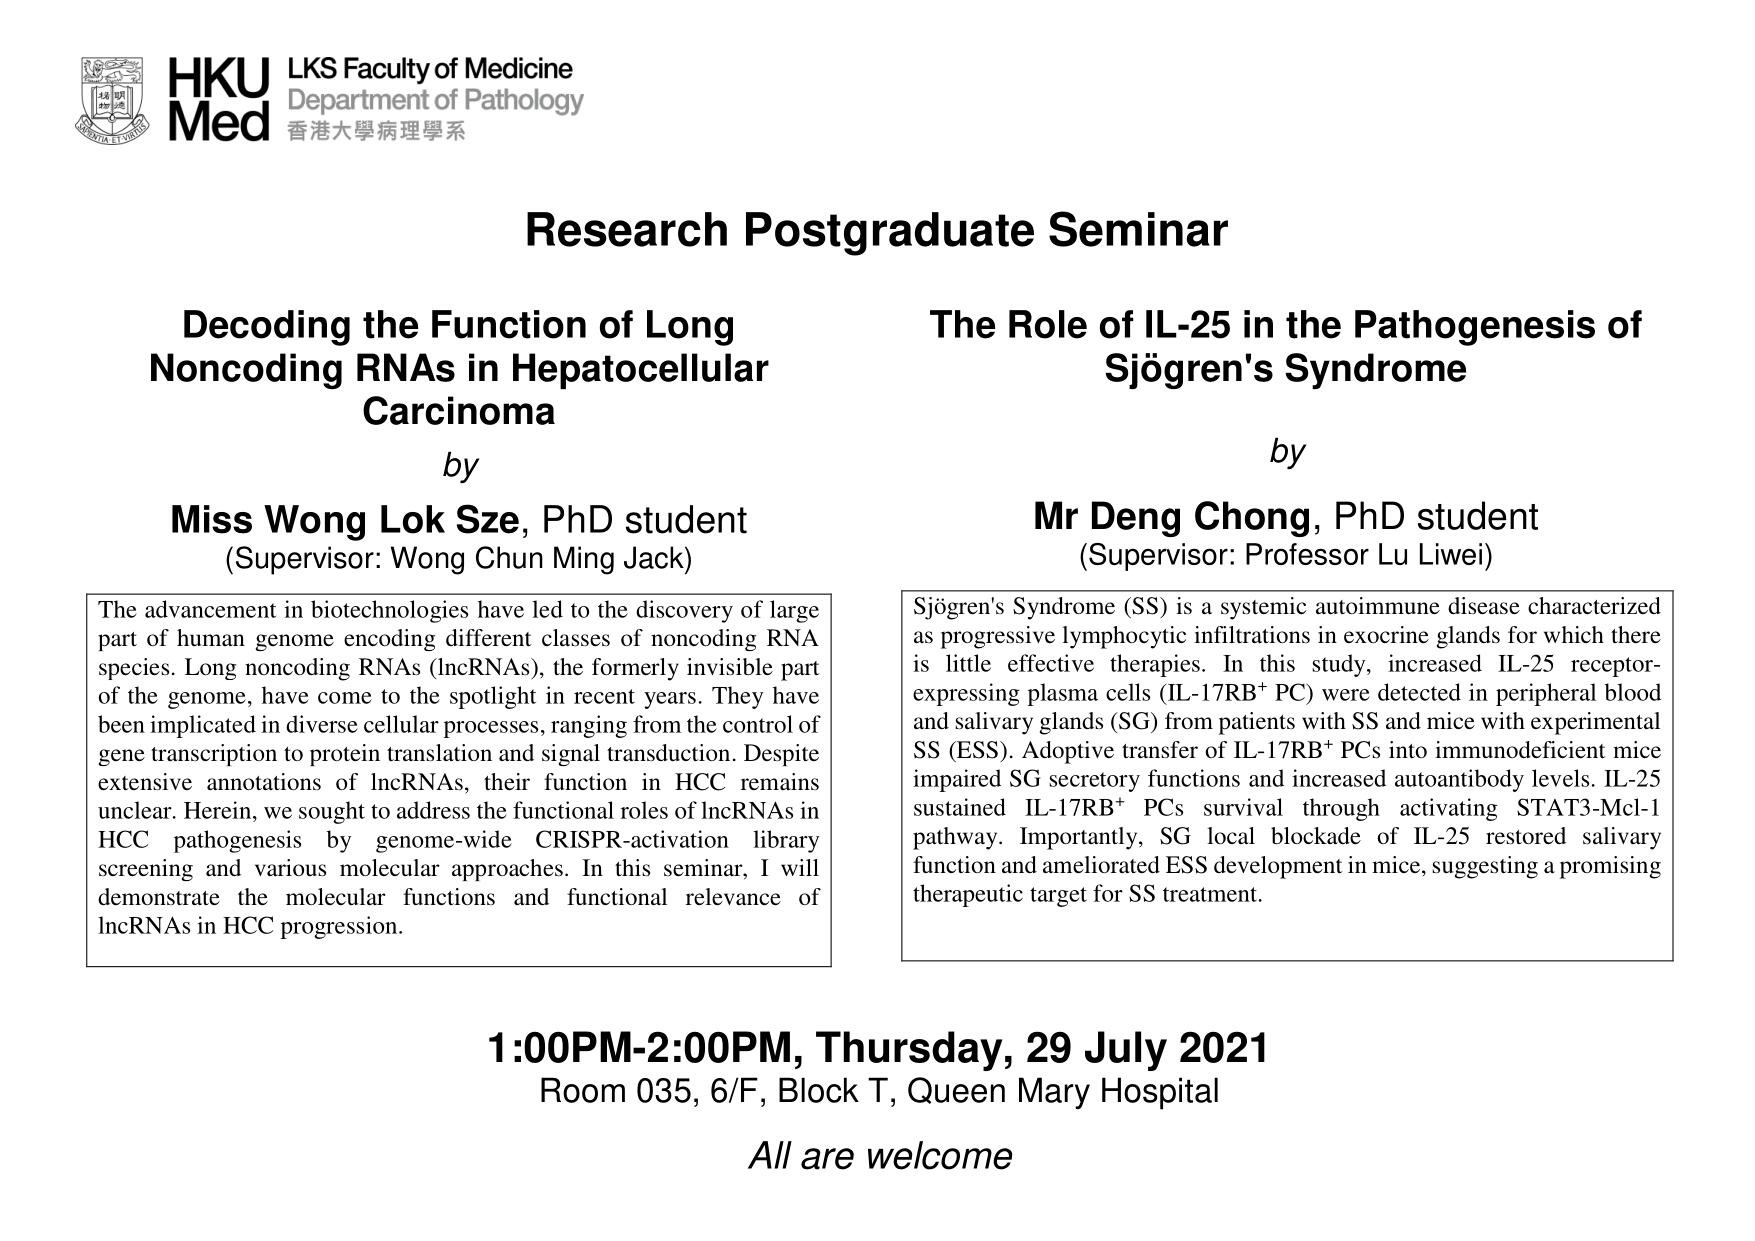 Research Postgraduate Seminar on 29 July 2021 (1 PM)